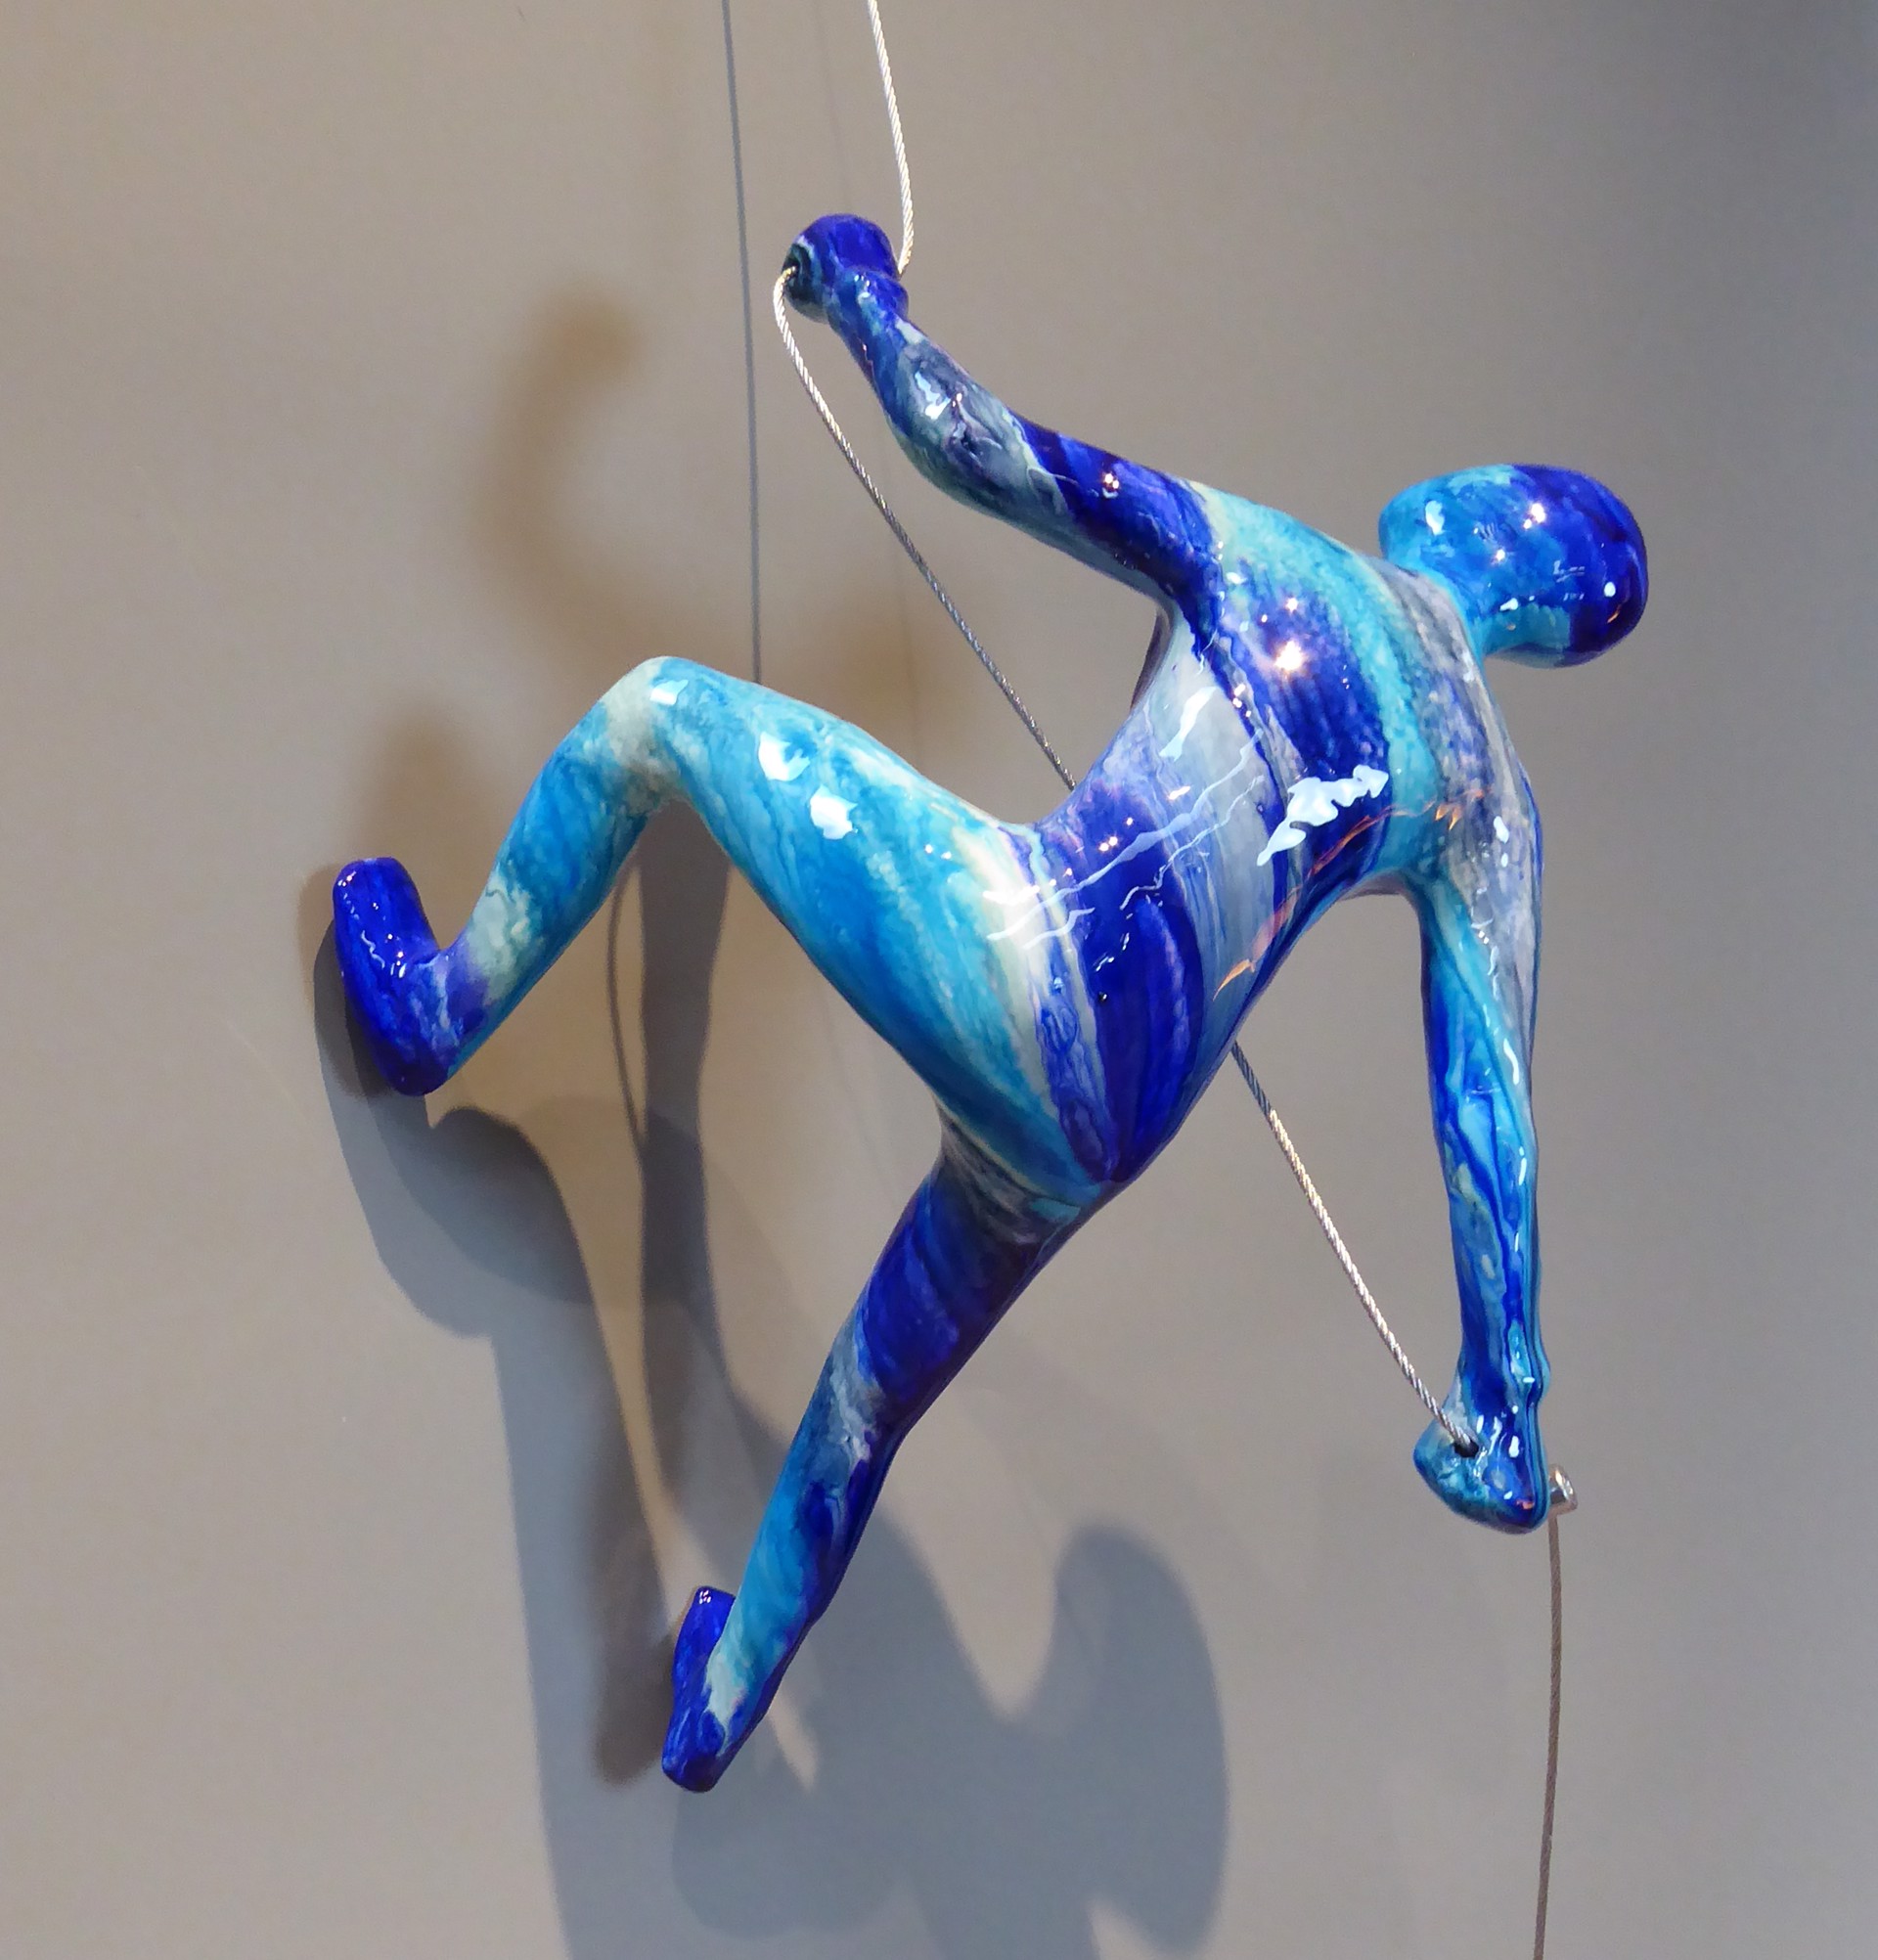 Male Climber Blue Swirl by Ancizar Marin